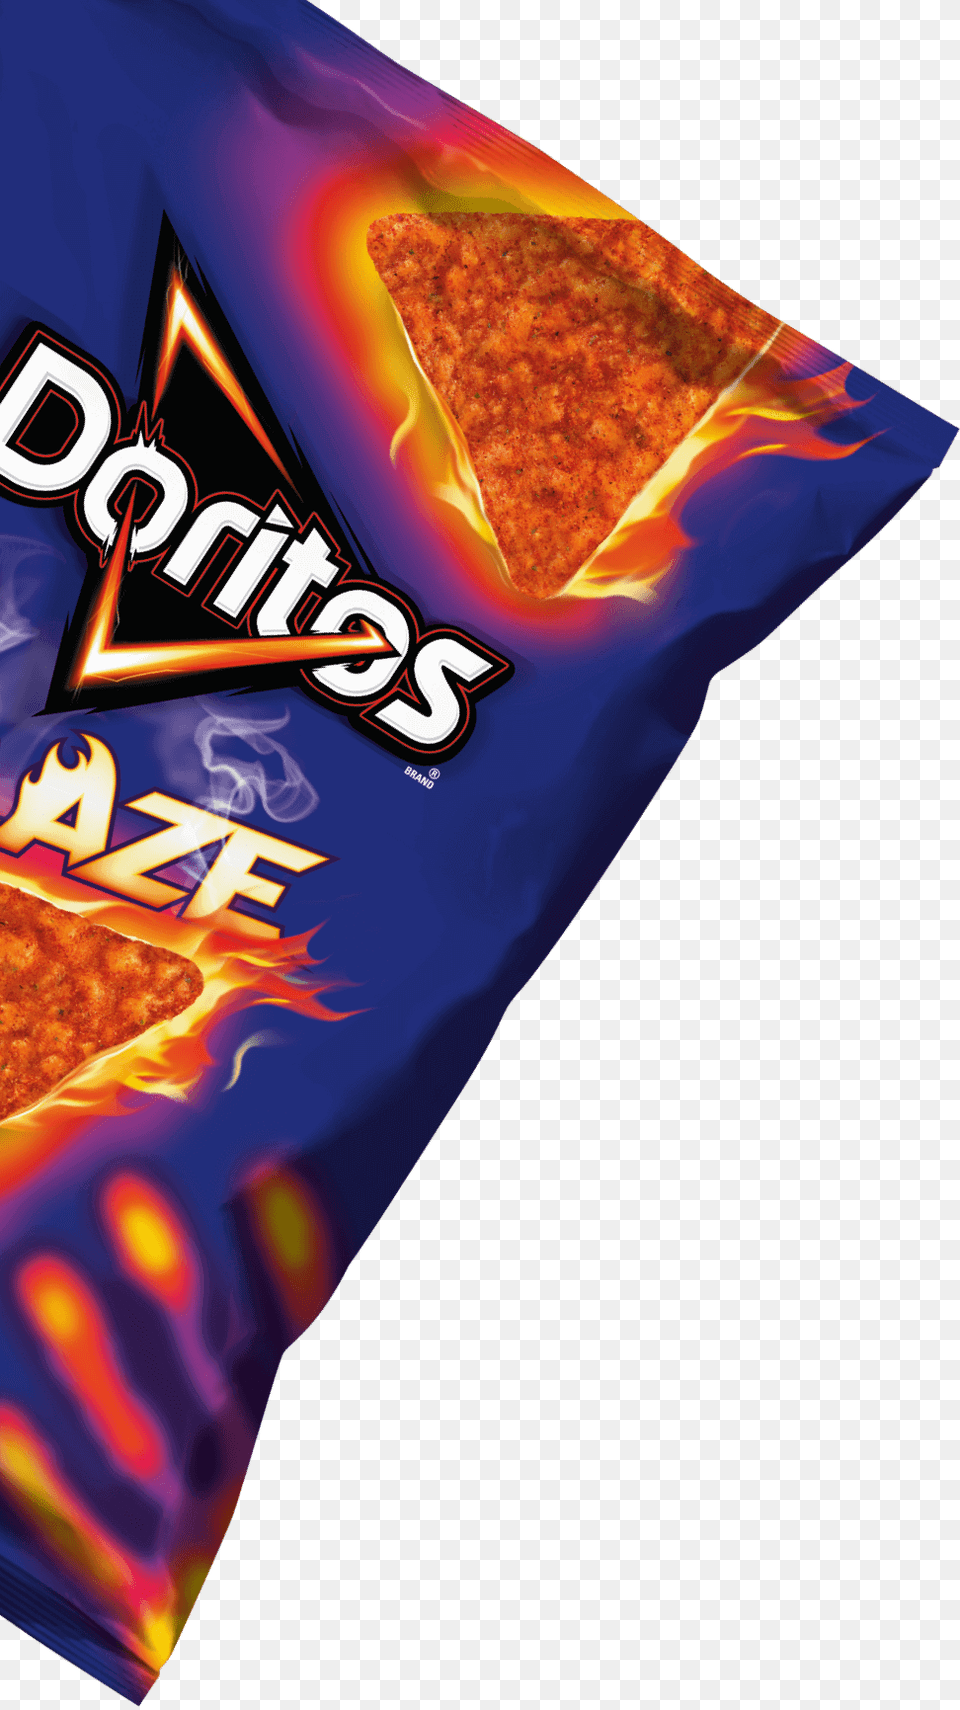 Doritos Logo Jpg Royalty Doritos Blaze, Food, Snack, Sweets, Pizza Png Image